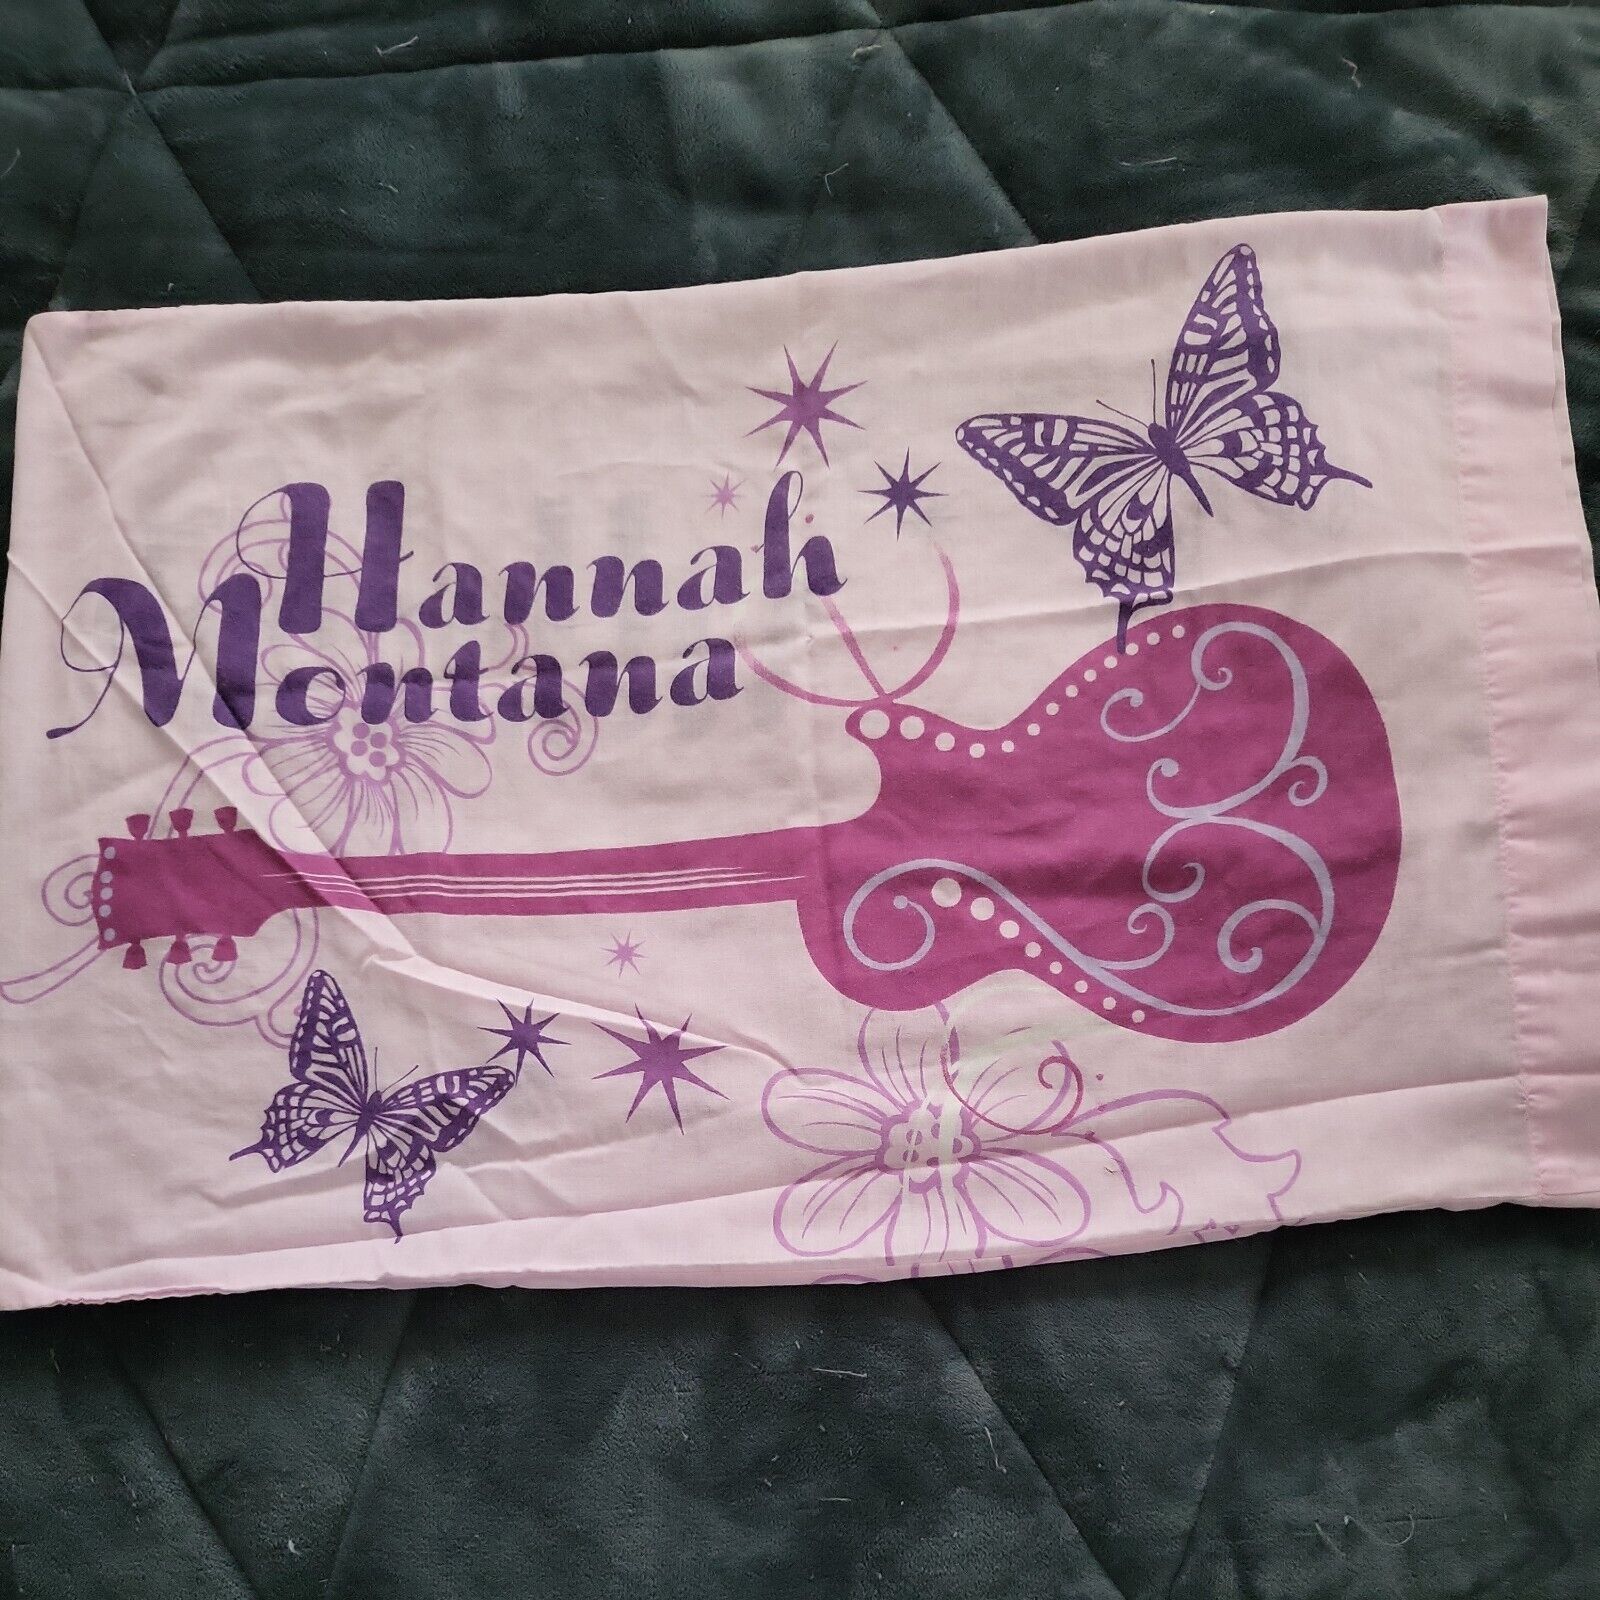 Hannah Montana Pillow Case (2007)